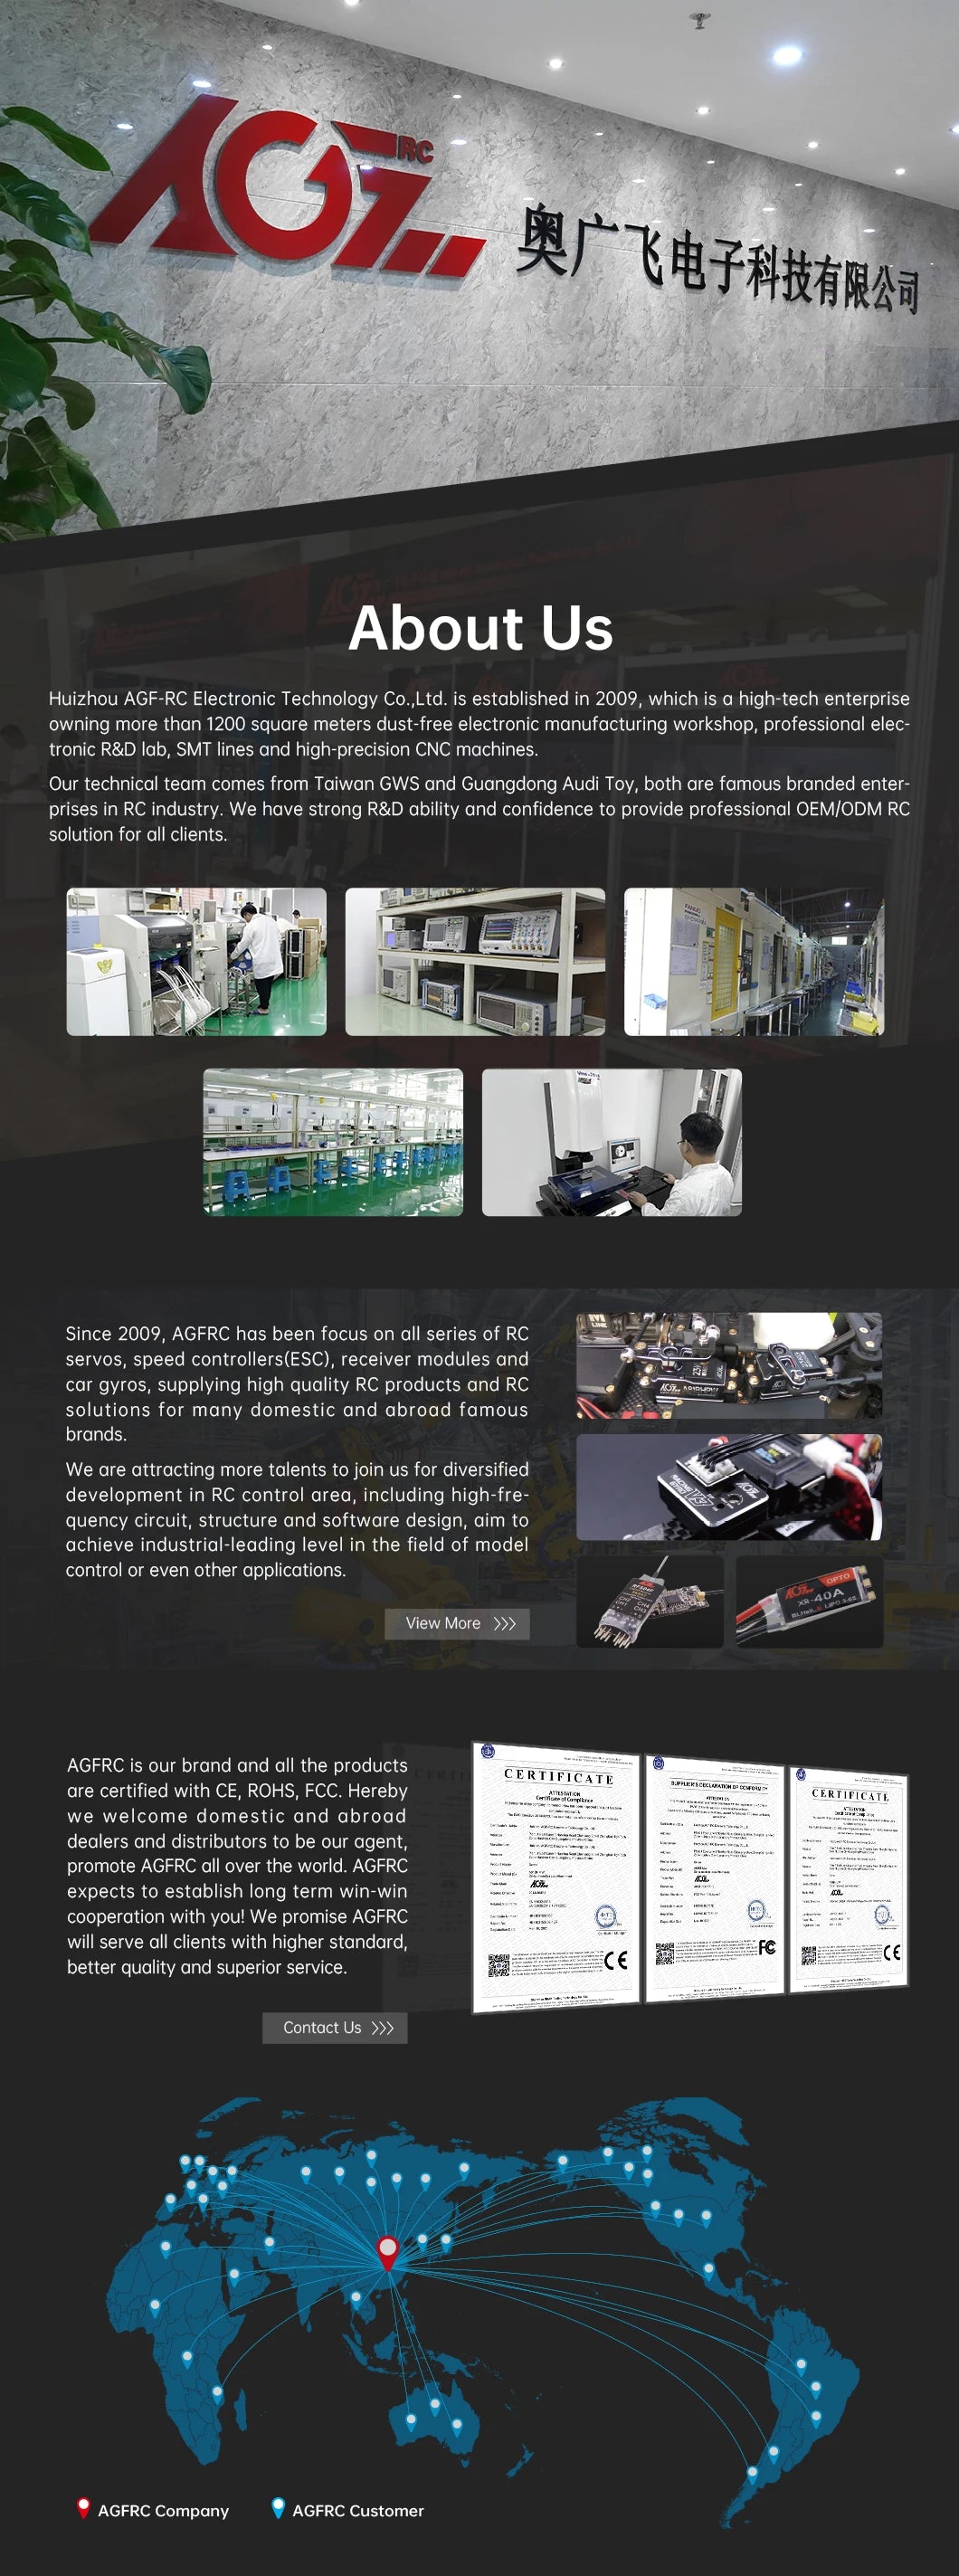 AGFRC B13DLM V2, Huizhou AGF-RC Electronic Technology Co-,Ltd. is a